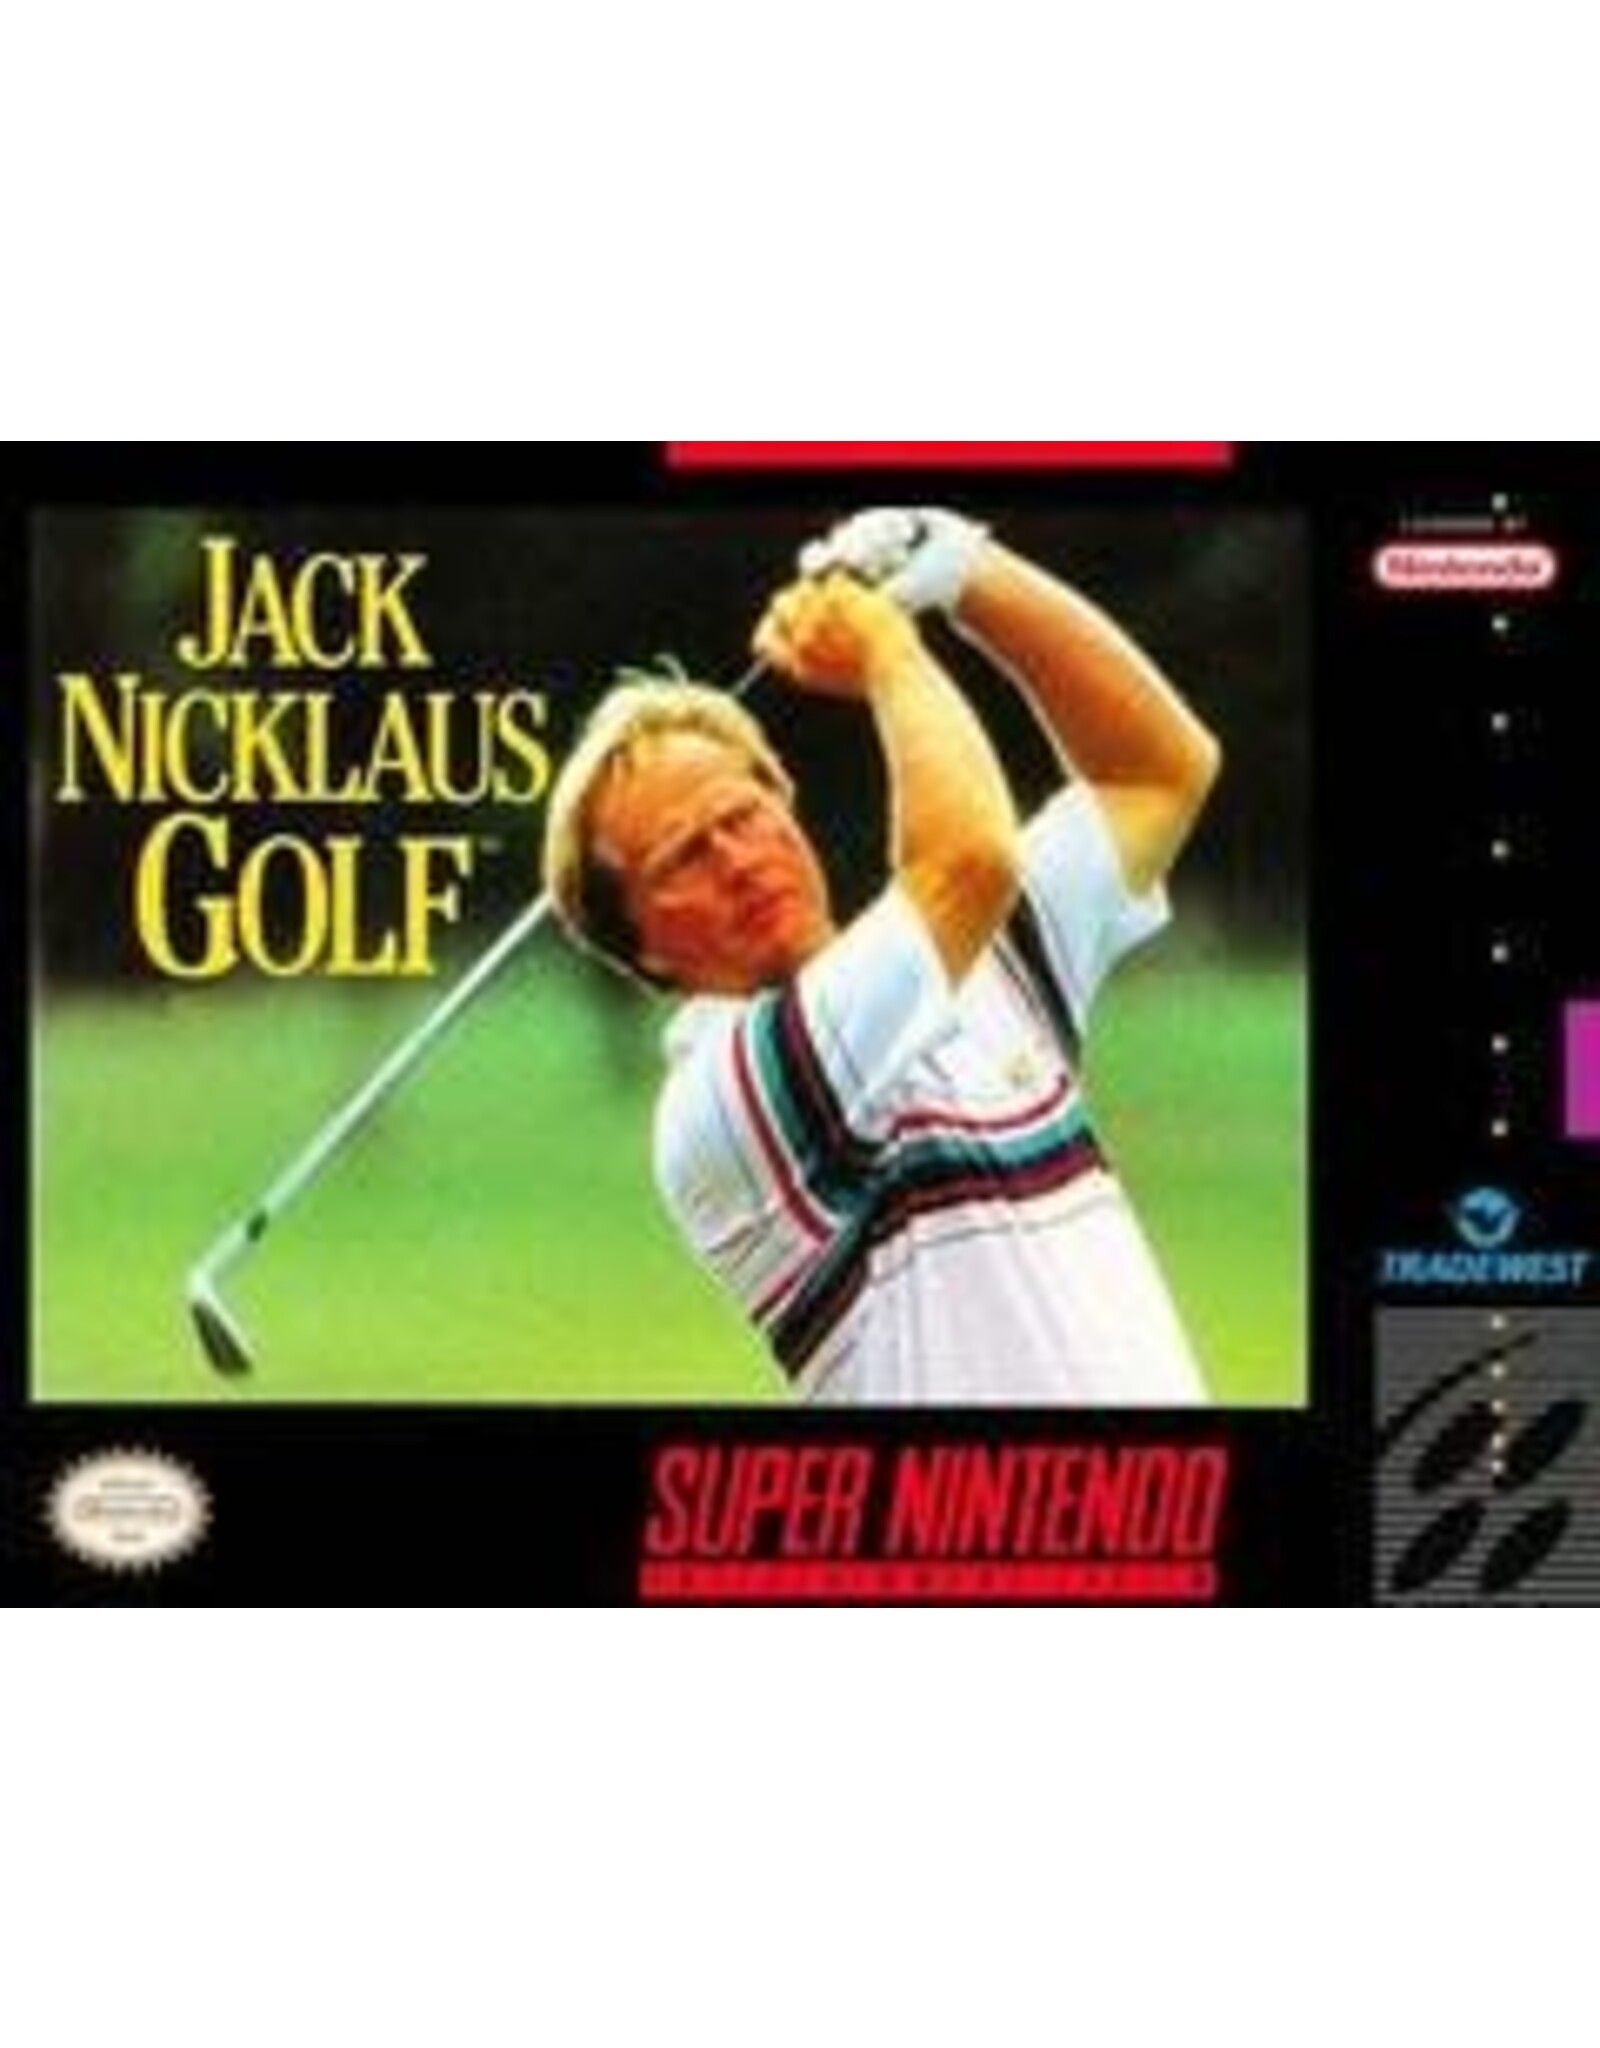 Super Nintendo Jack Nicklaus Golf (Cart Only)